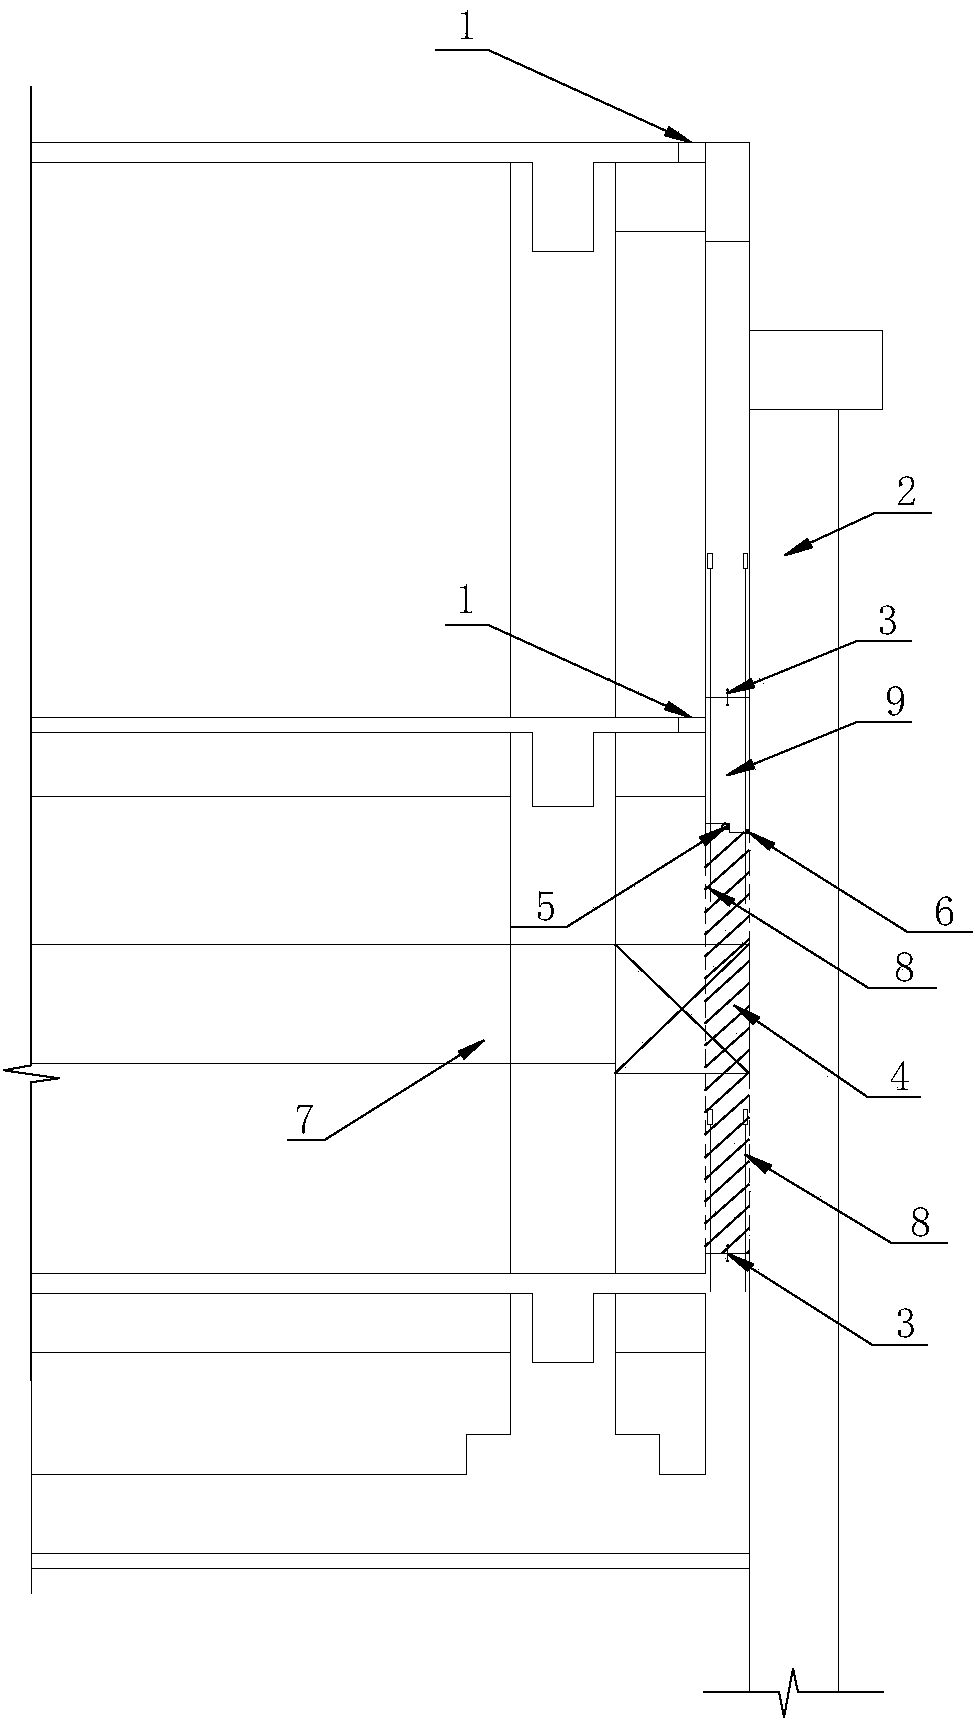 Later-construction method for inner wall of basement